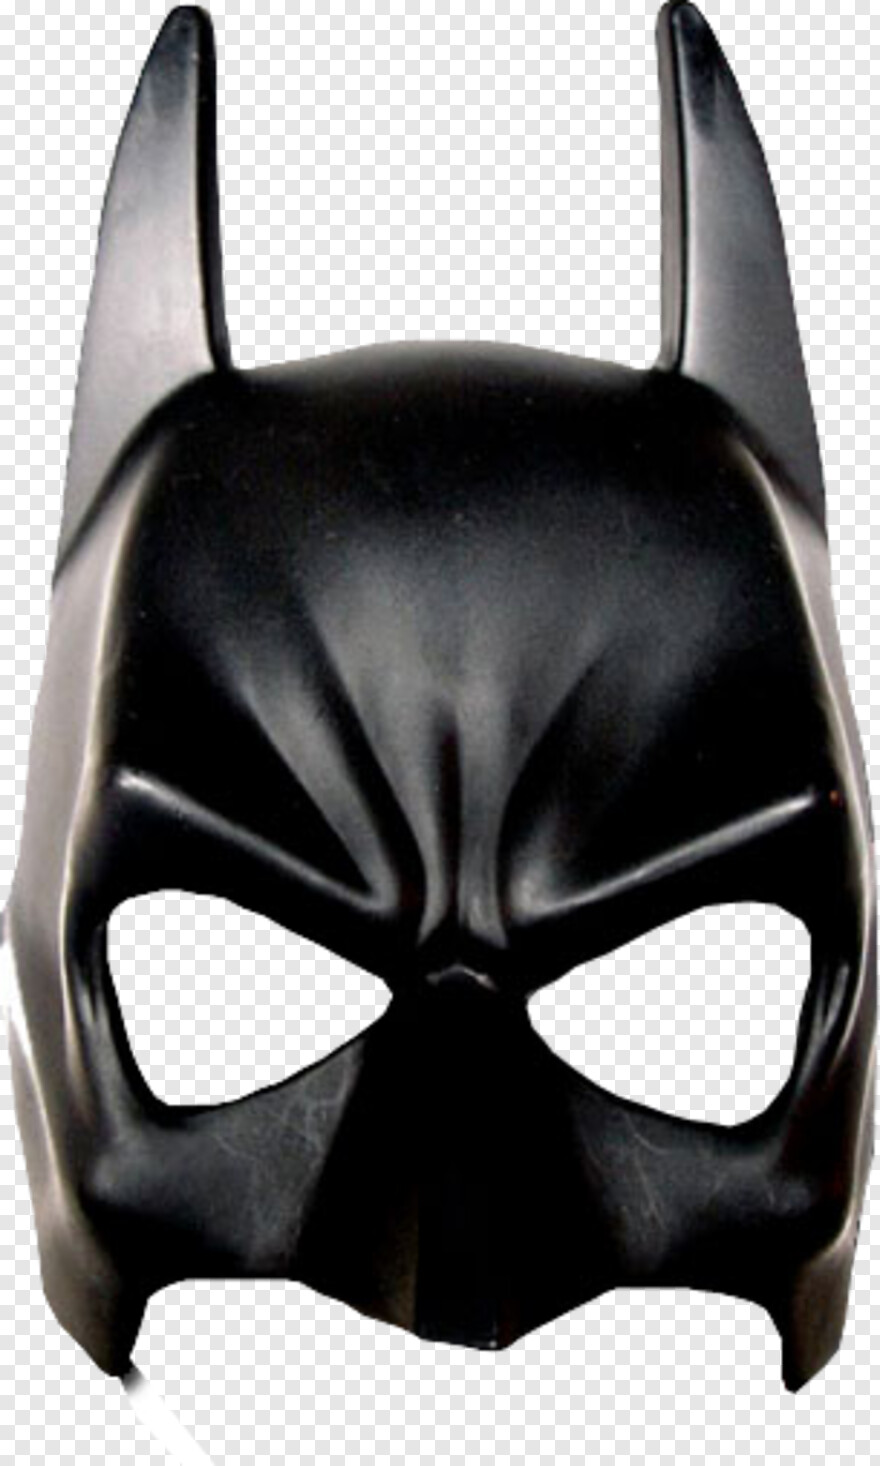  Superhero Mask, Batman Mask, Mardi Gras Mask, Batman Cowl, Guy Fawkes Mask, Jason Mask